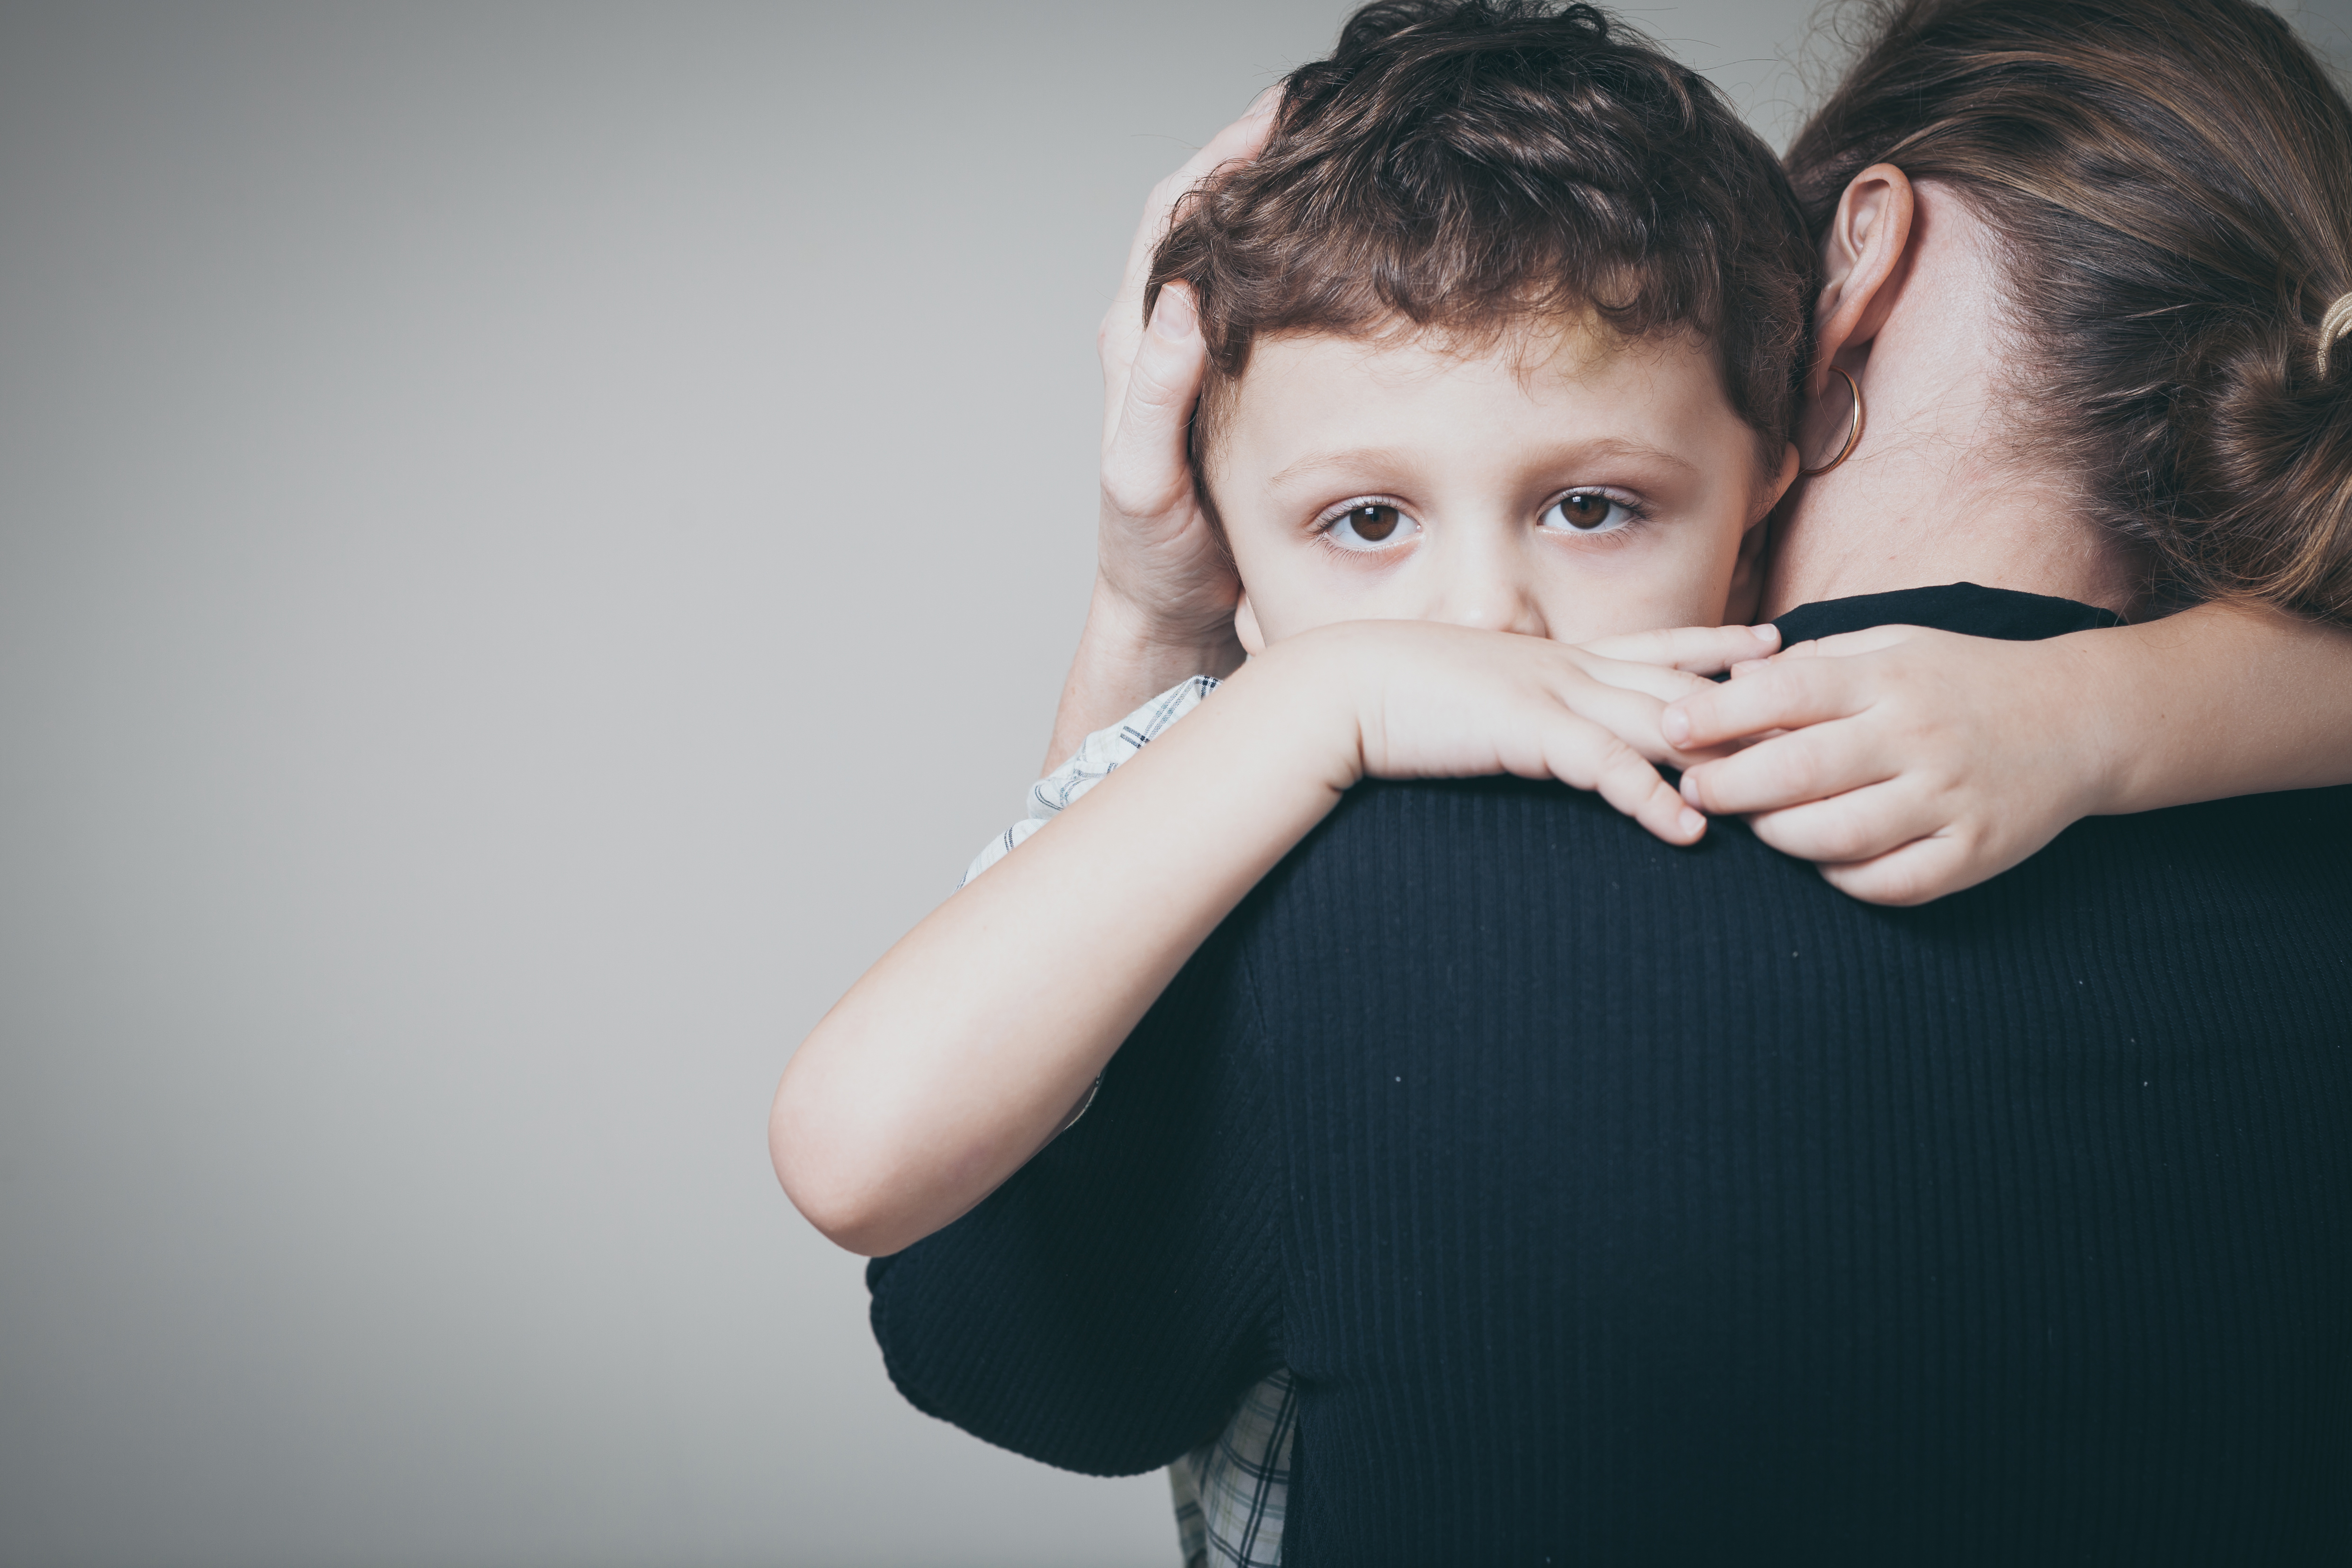 Helping your child through trauma